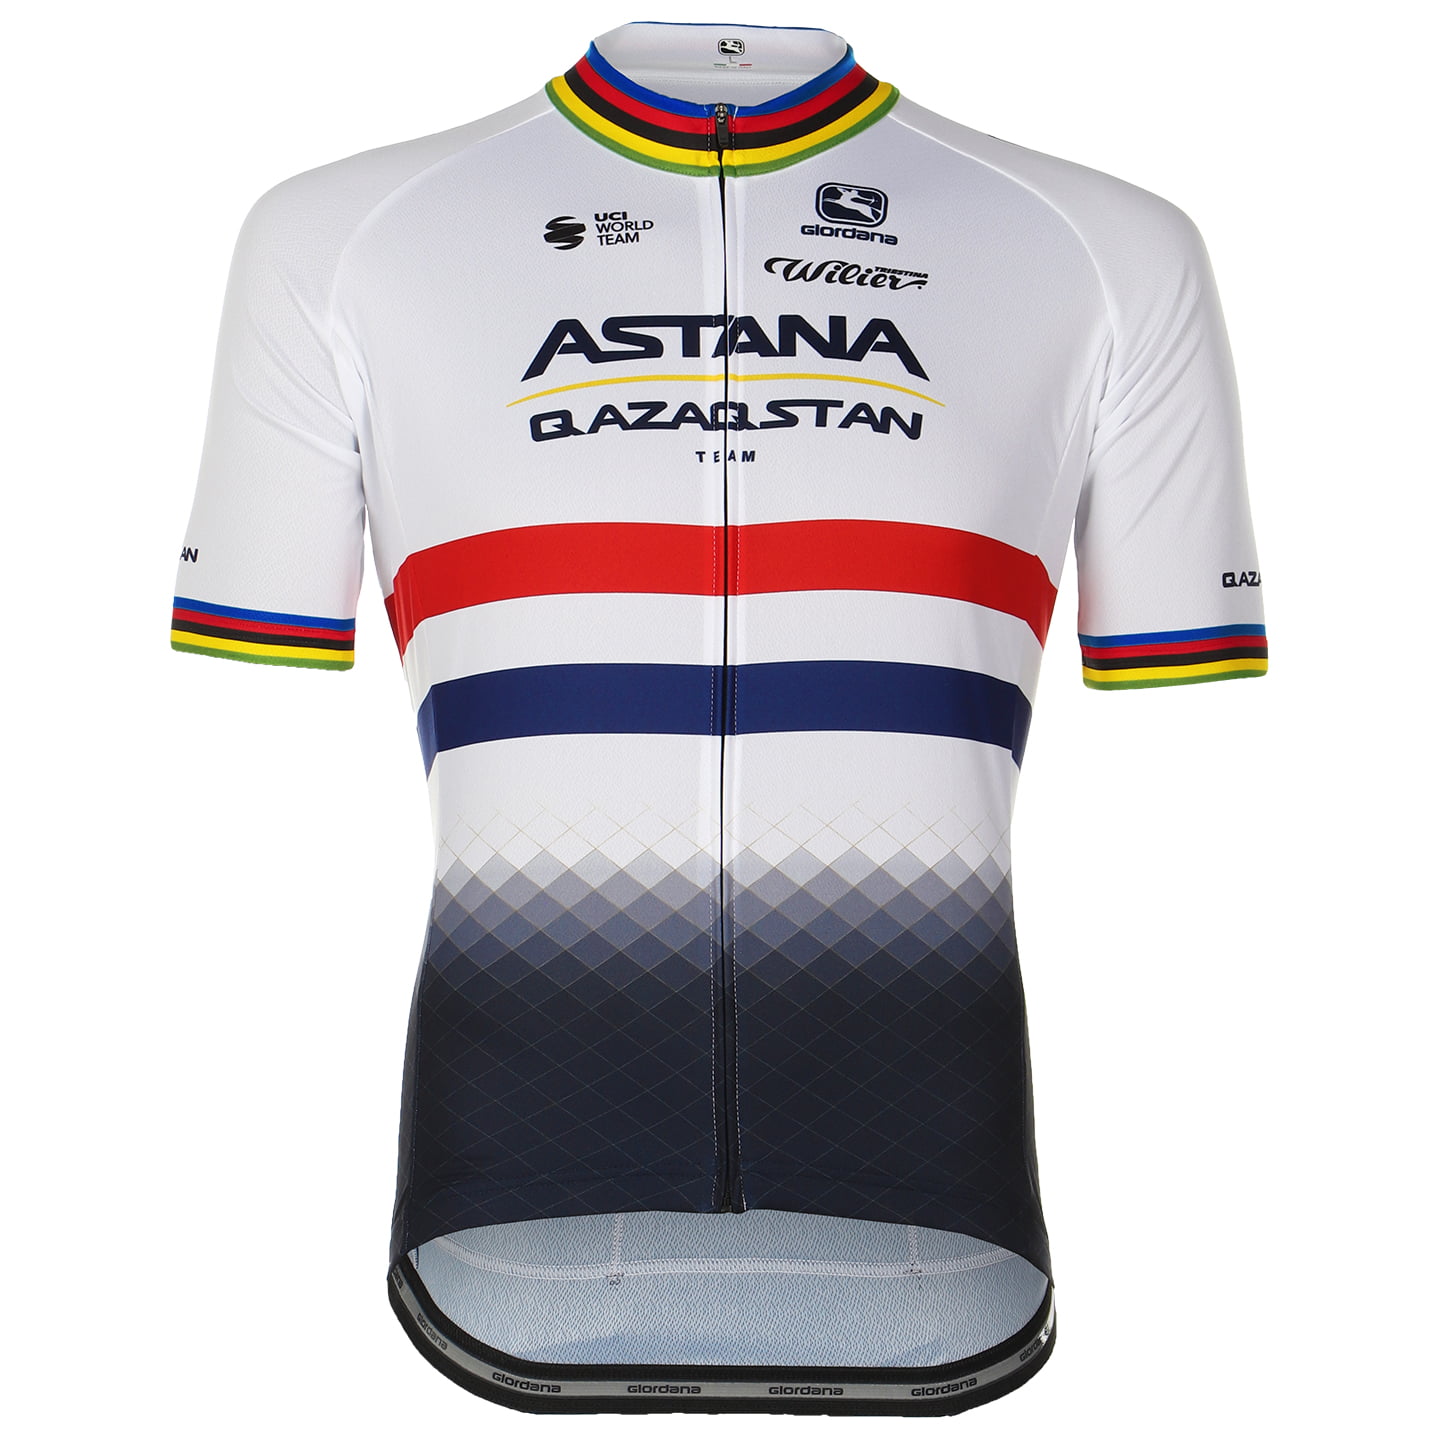 ASTANA QAZAQSTAN TEAM Short Sleeve British Champion 2023 Jersey, for men, size L, Cycling shirt, Cycle clothing